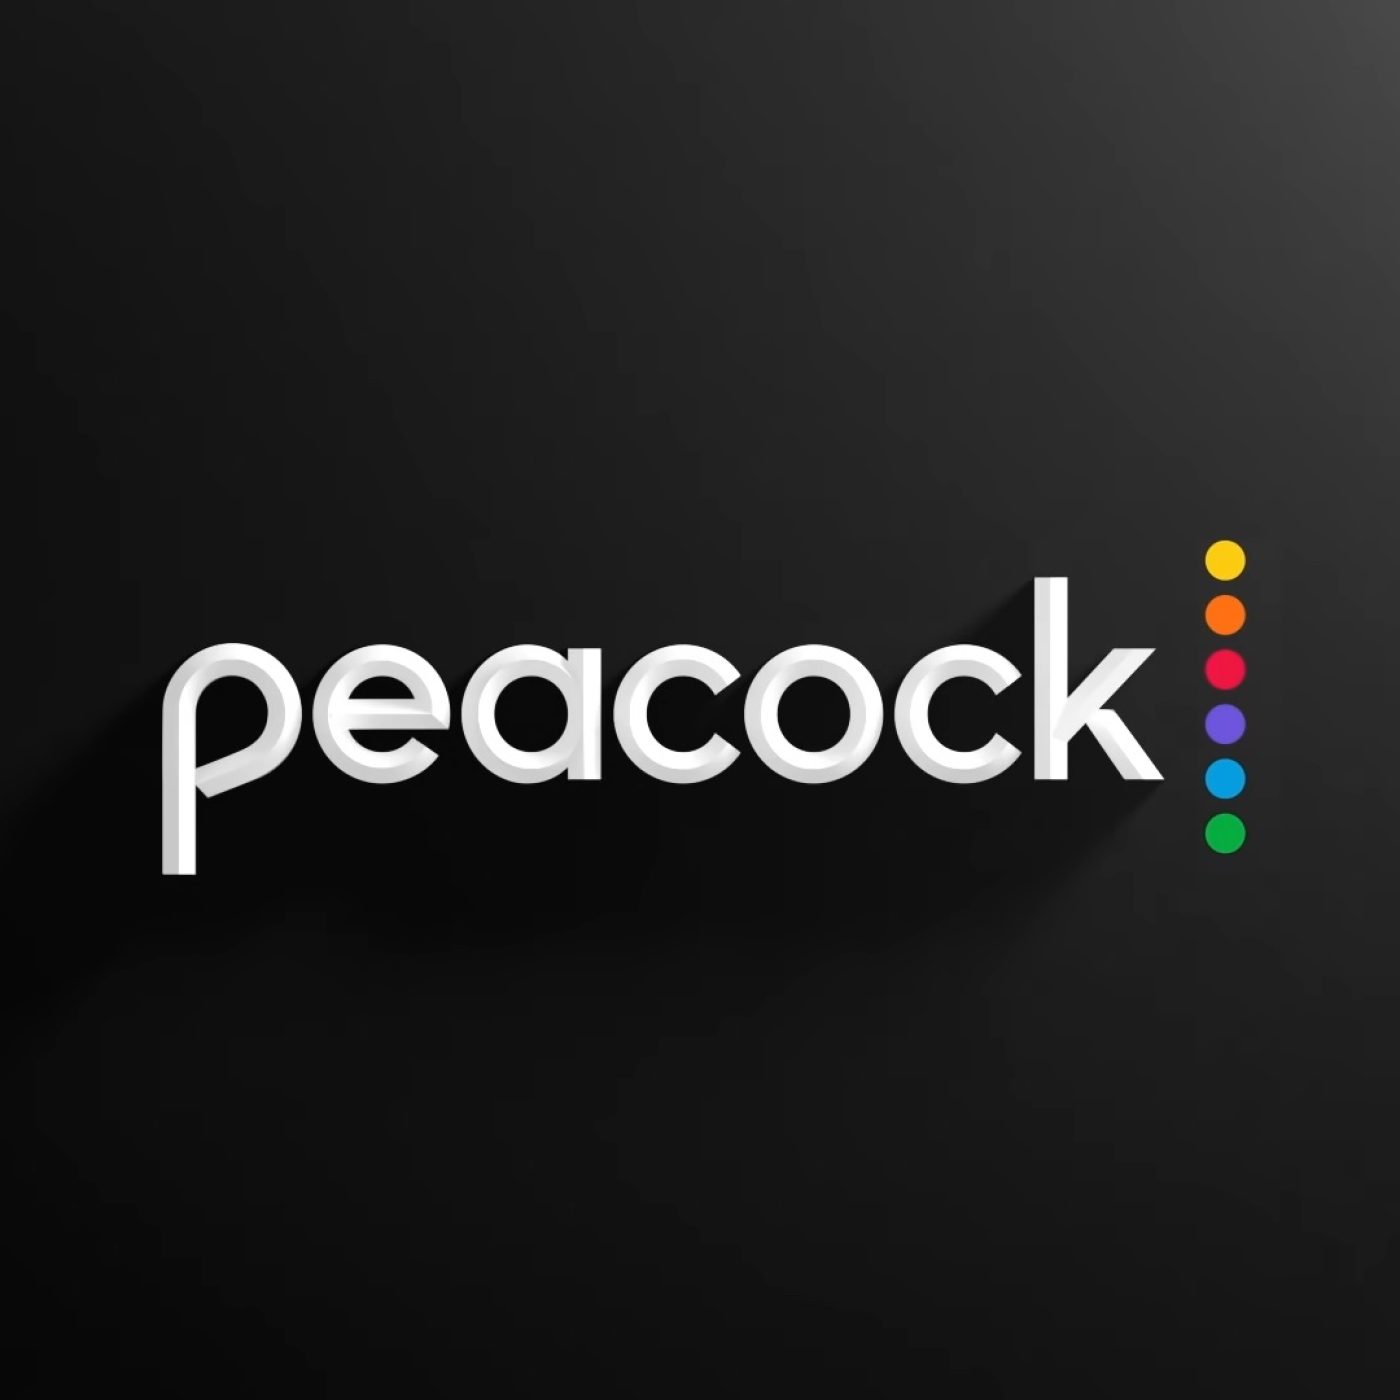 https://bgr.com/wp-content/uploads/2022/02/Peacock.jpg?quality=82&strip=all&resize=1400,1400